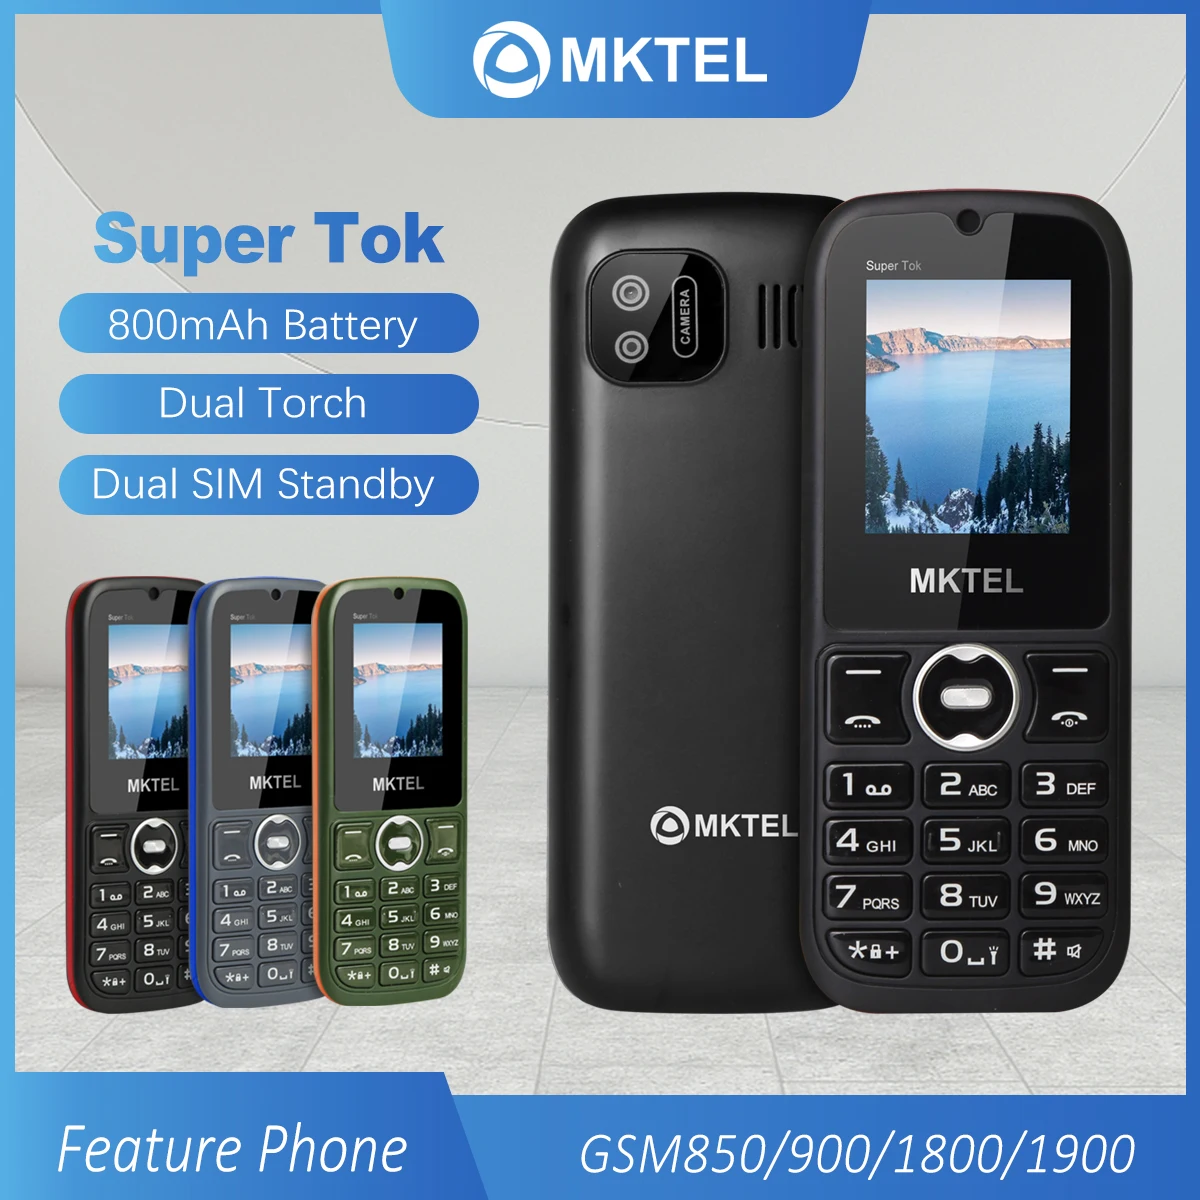 MKTEL SUPER TOK Feature Phone 1.77